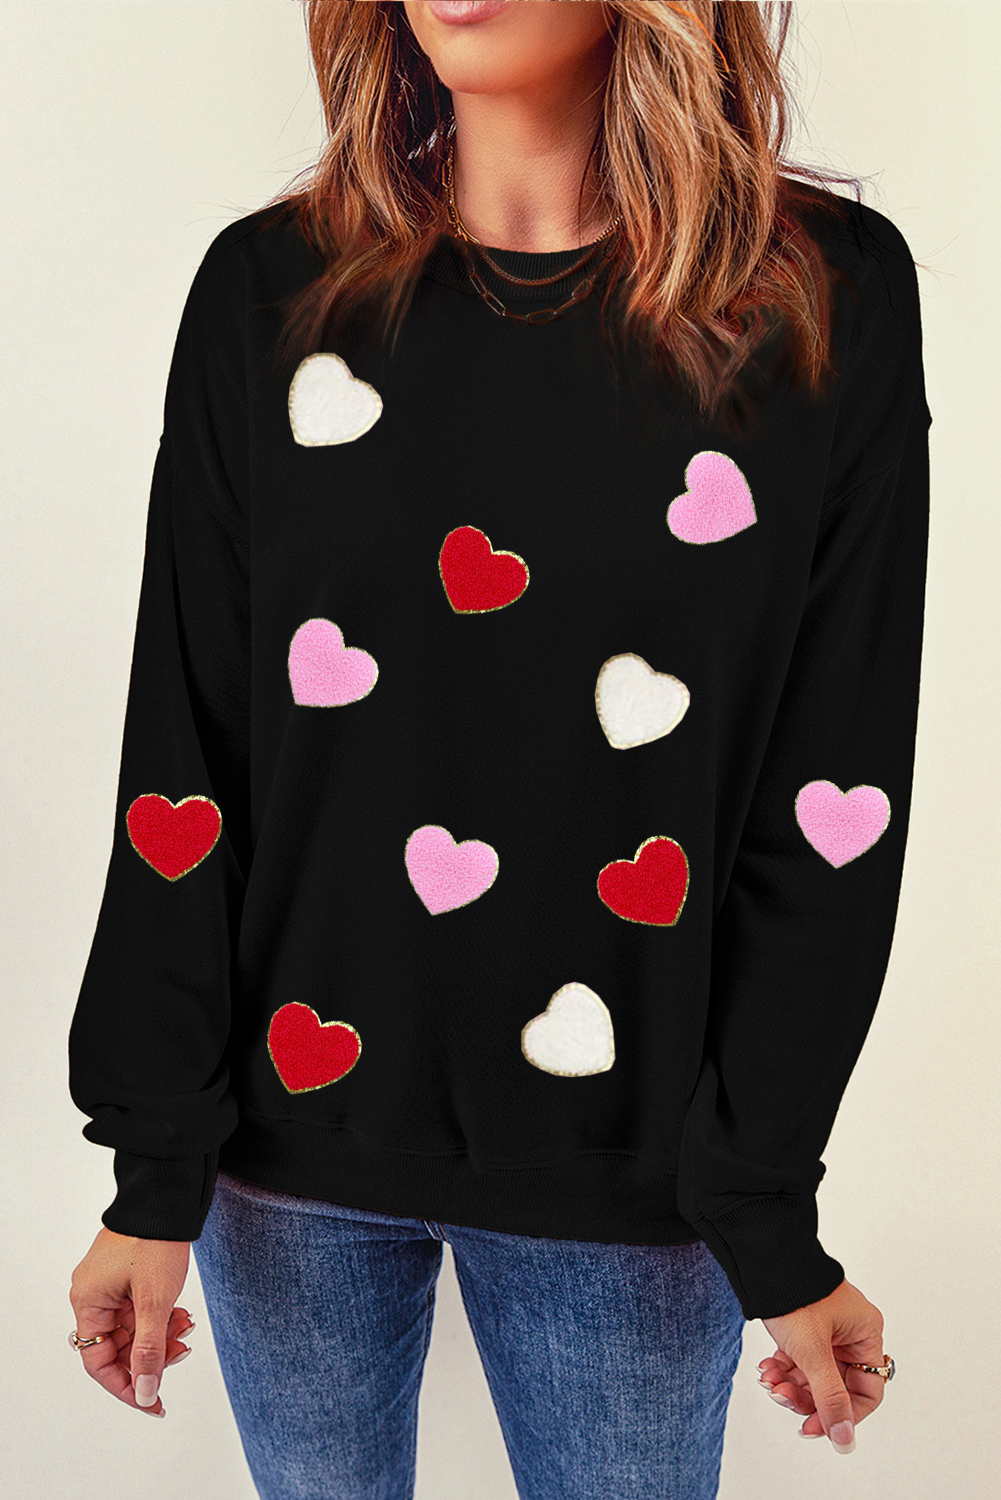 $9.84 Black Heart Shaped Chenille Embroidered Crew Neck Sweatshirt ...